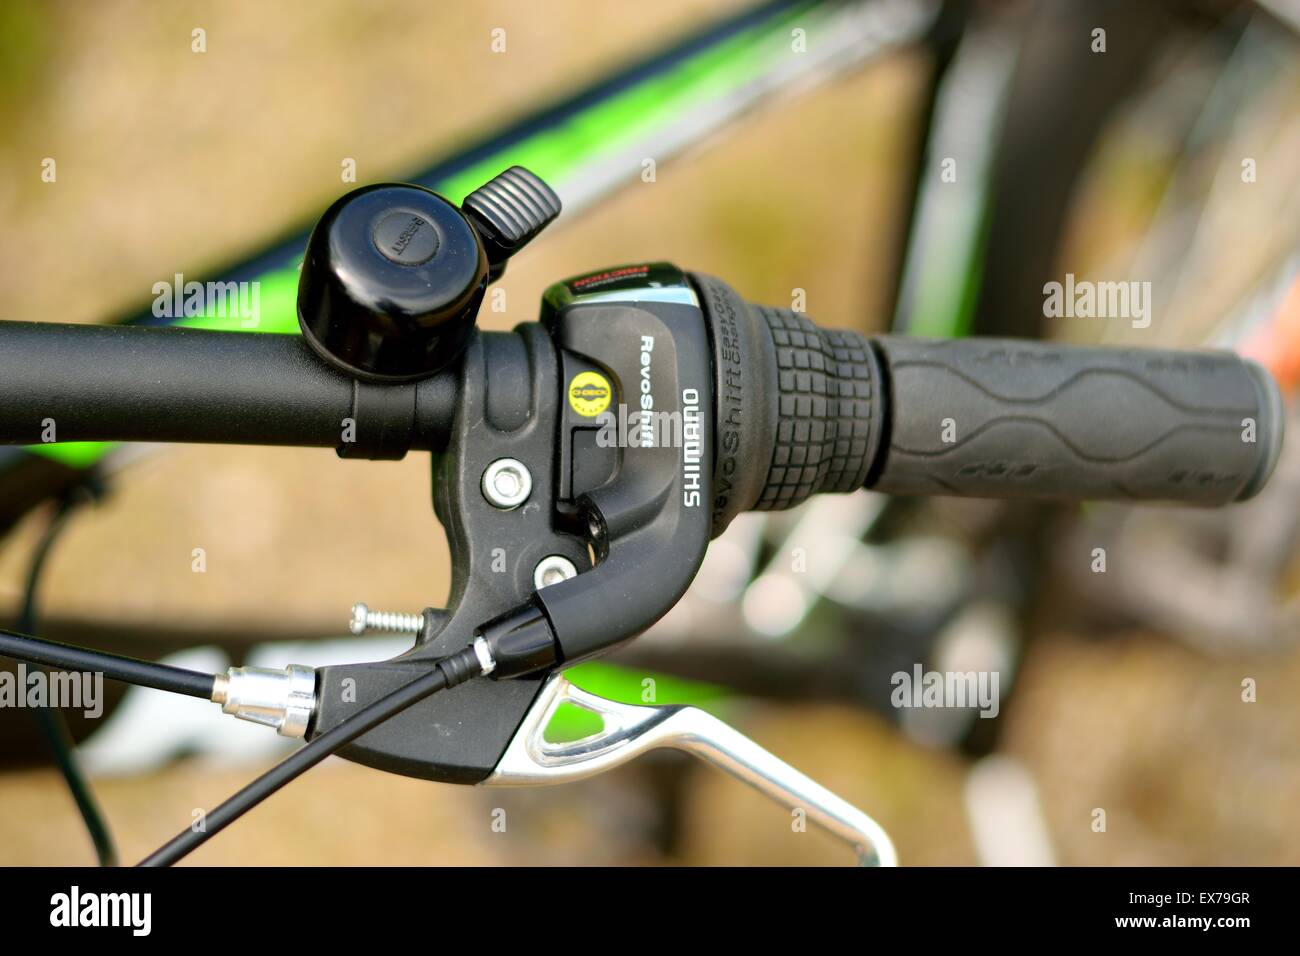 Shimano bicycle gears handelbar Stock Photo